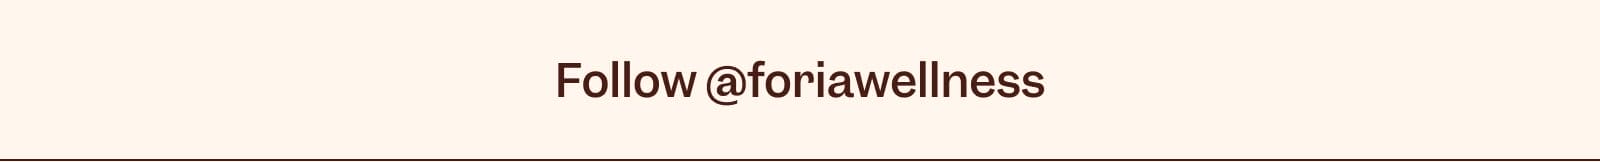 Follow @foriawellness